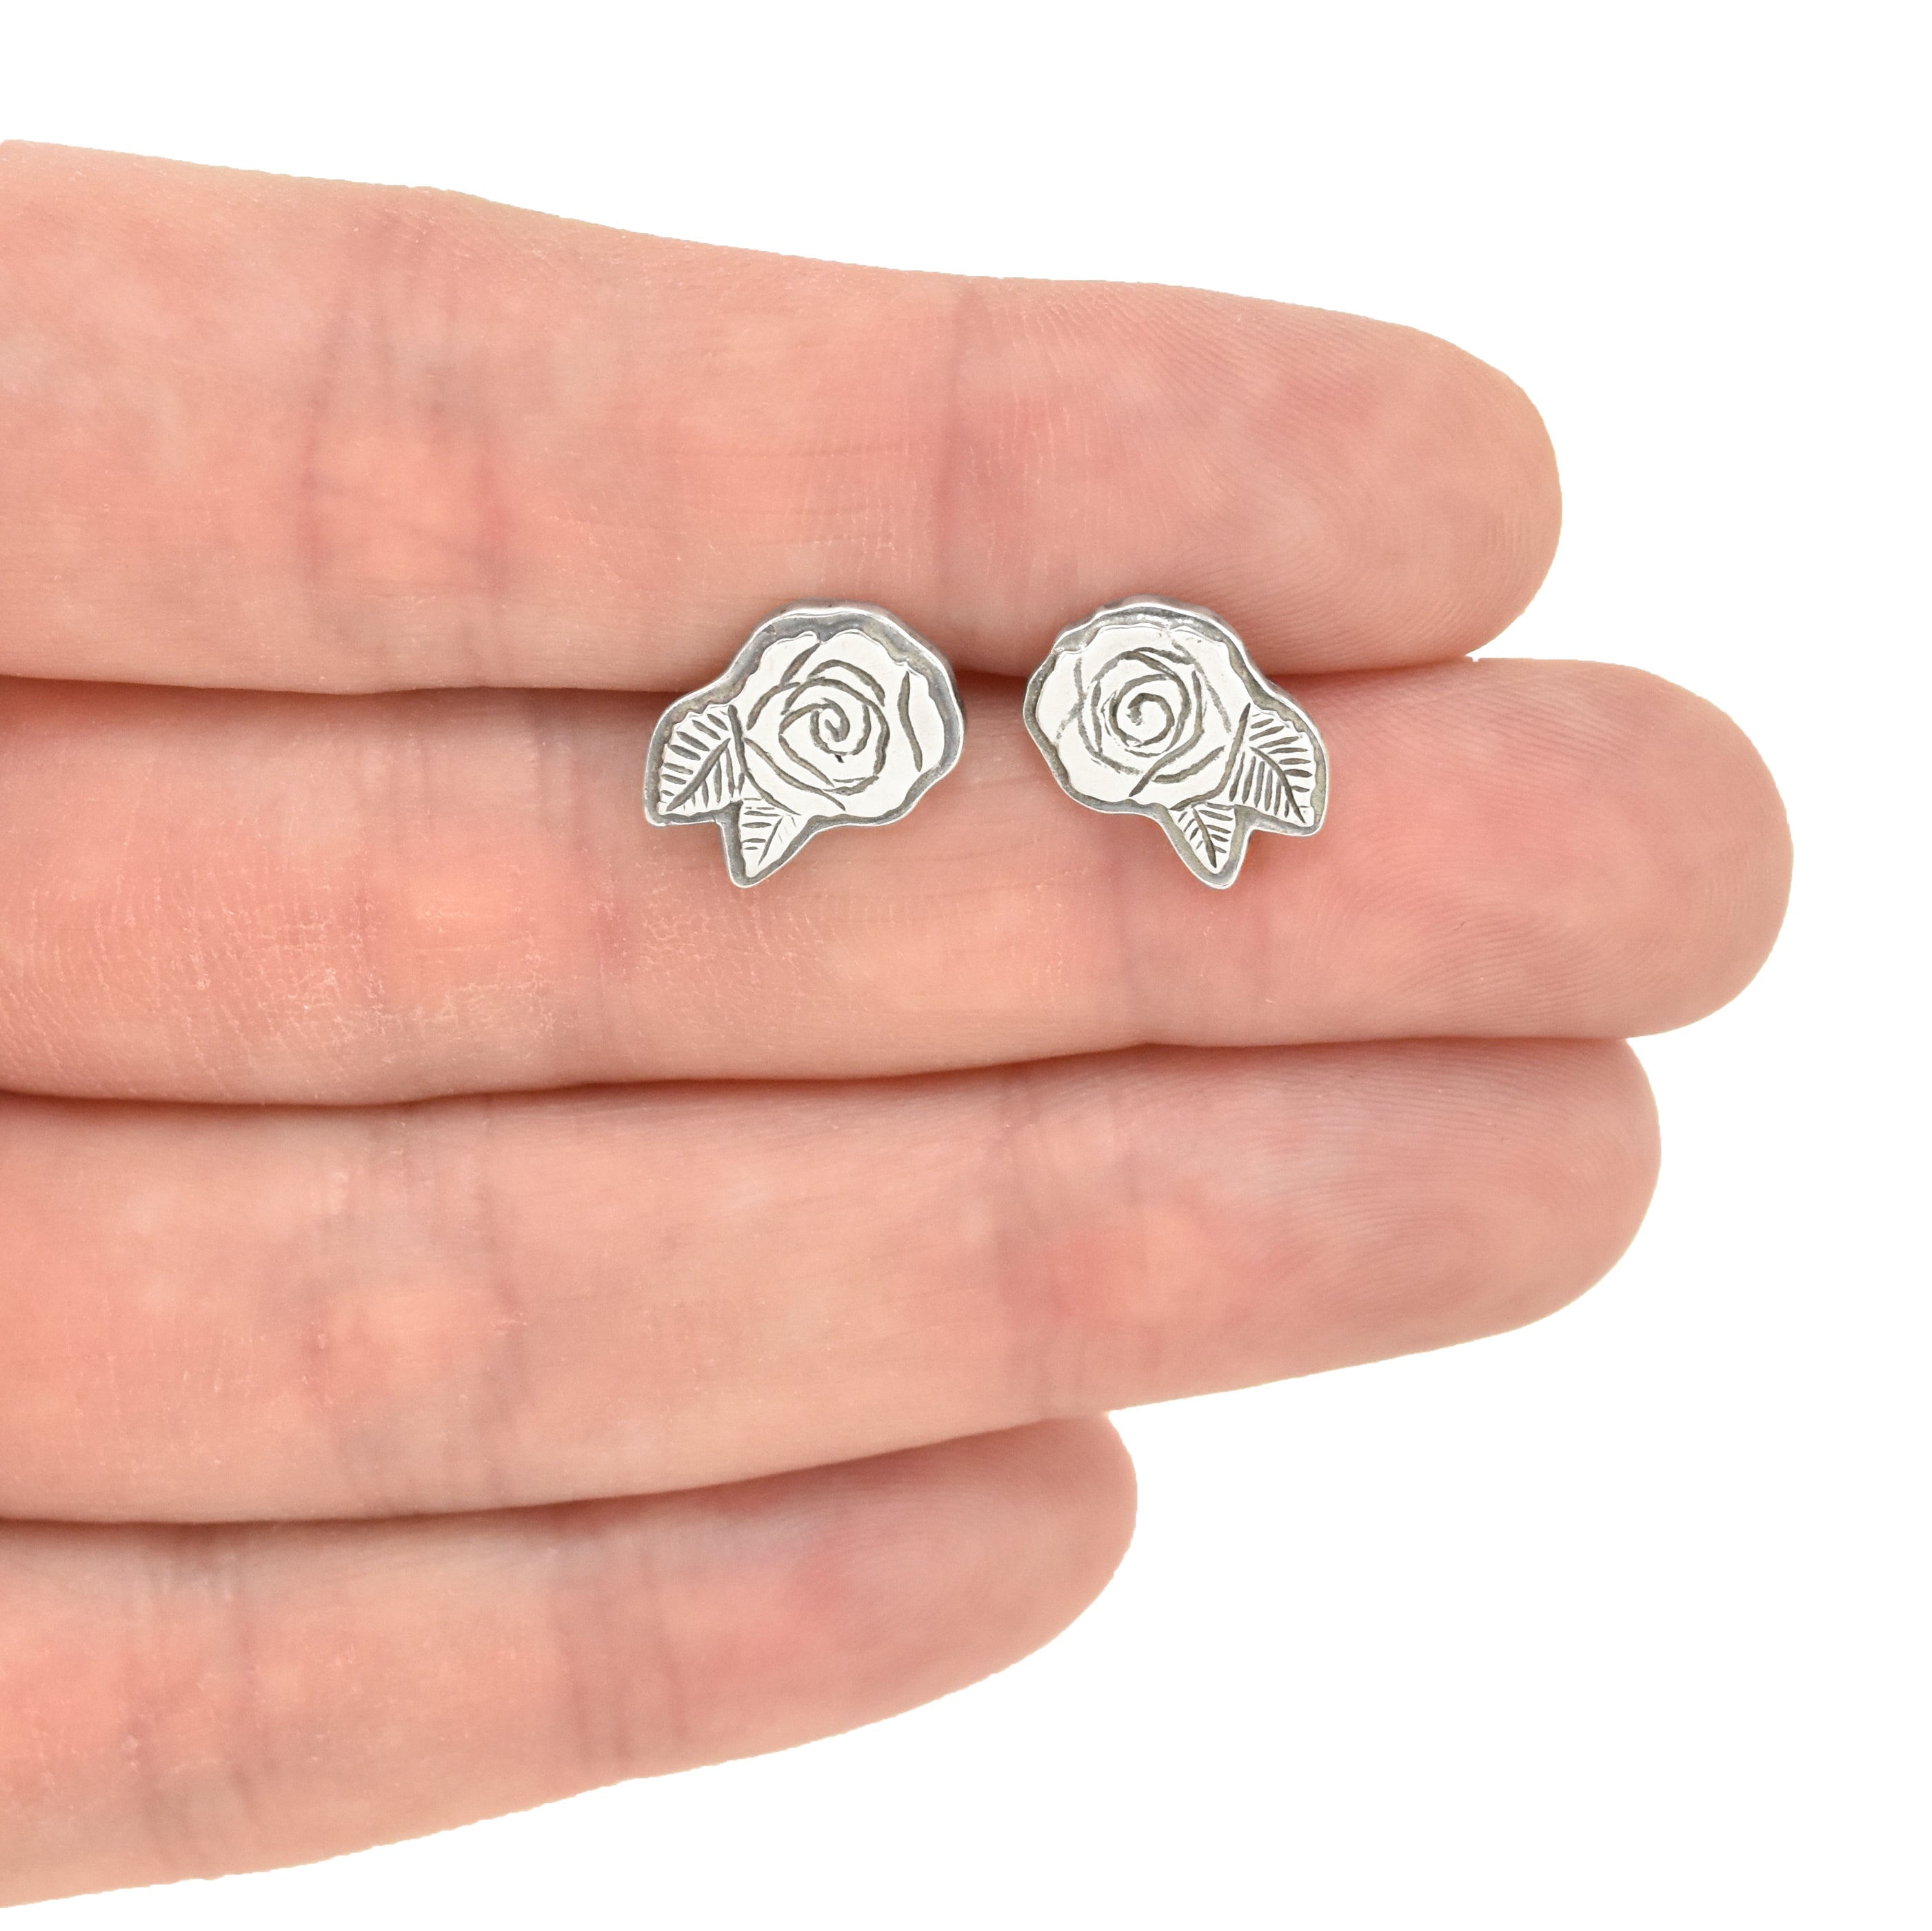 Rose Post Earrings - Silver Earrings   6950 - handmade by Beth Millner Jewelry